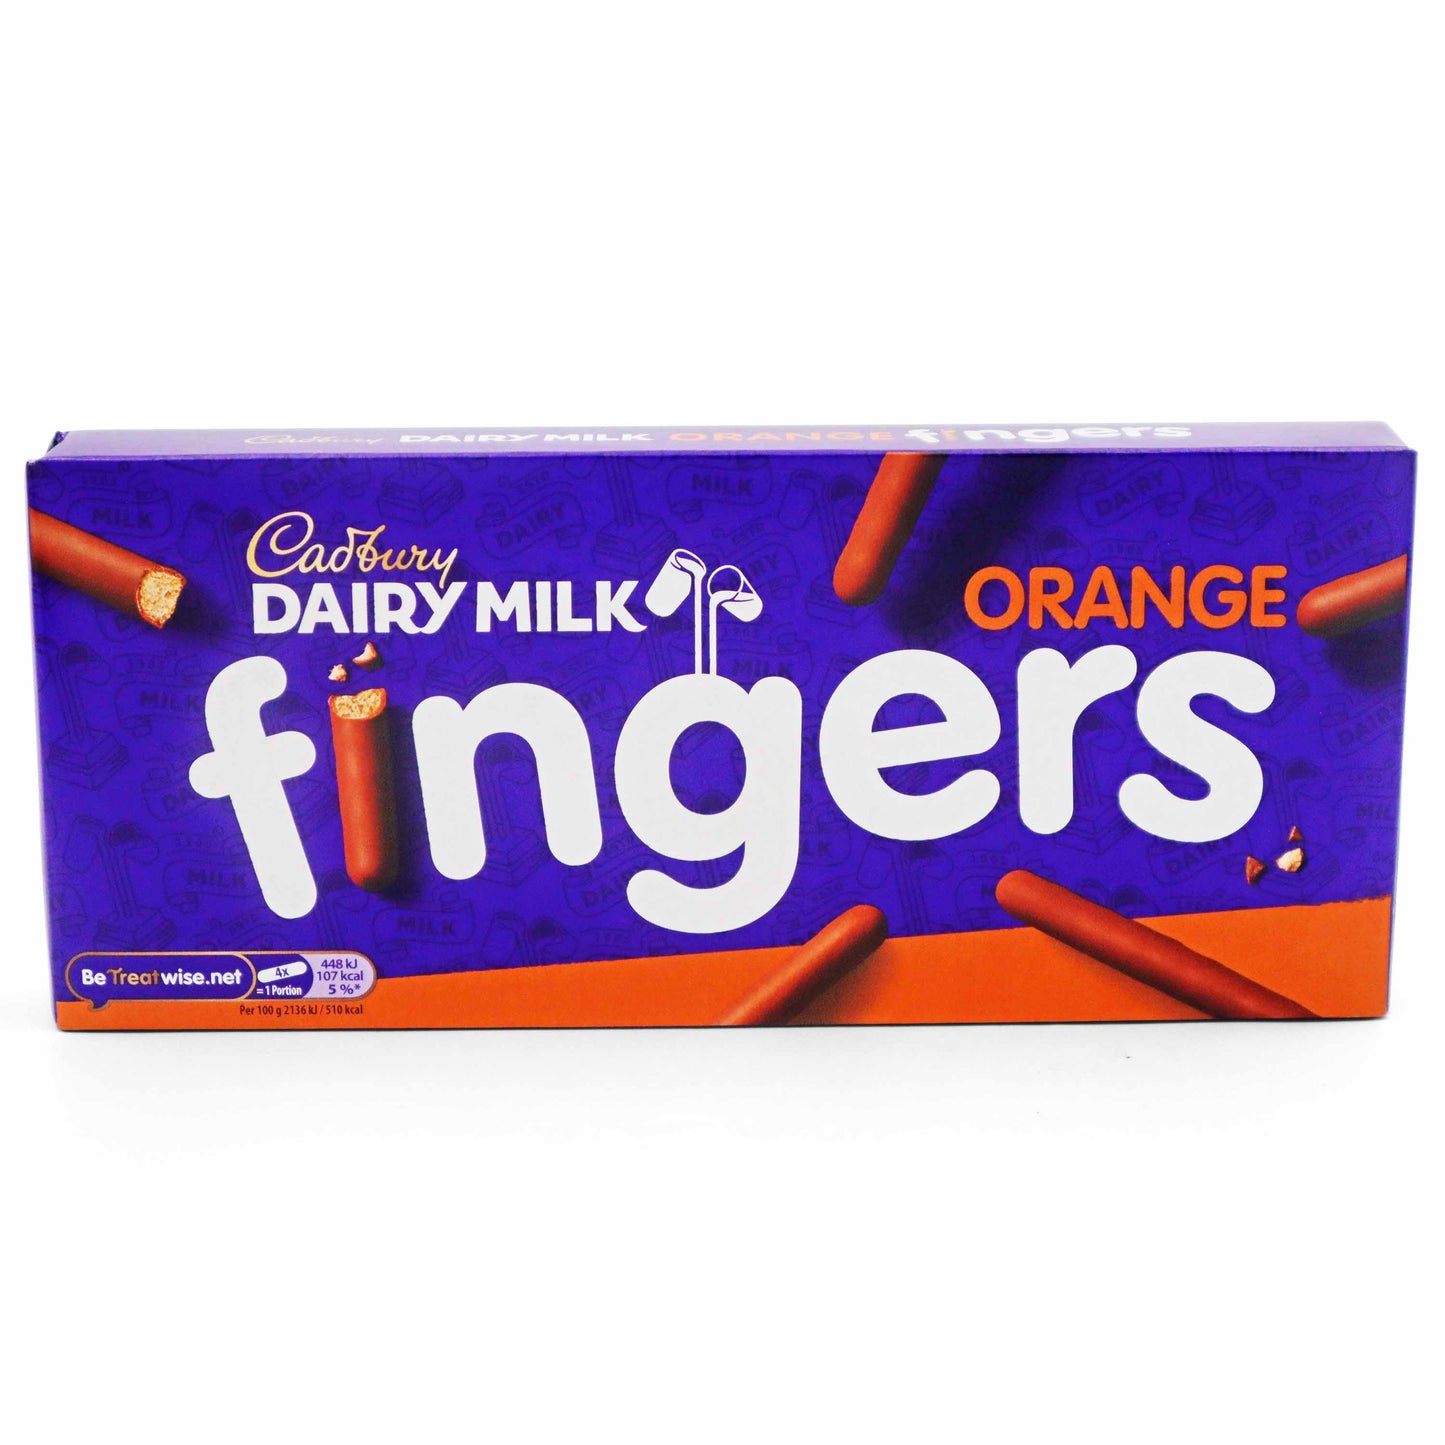 Cadbury Dairy Milk Orange Fingers Chocolate Biscuits - 114g - British Snacks